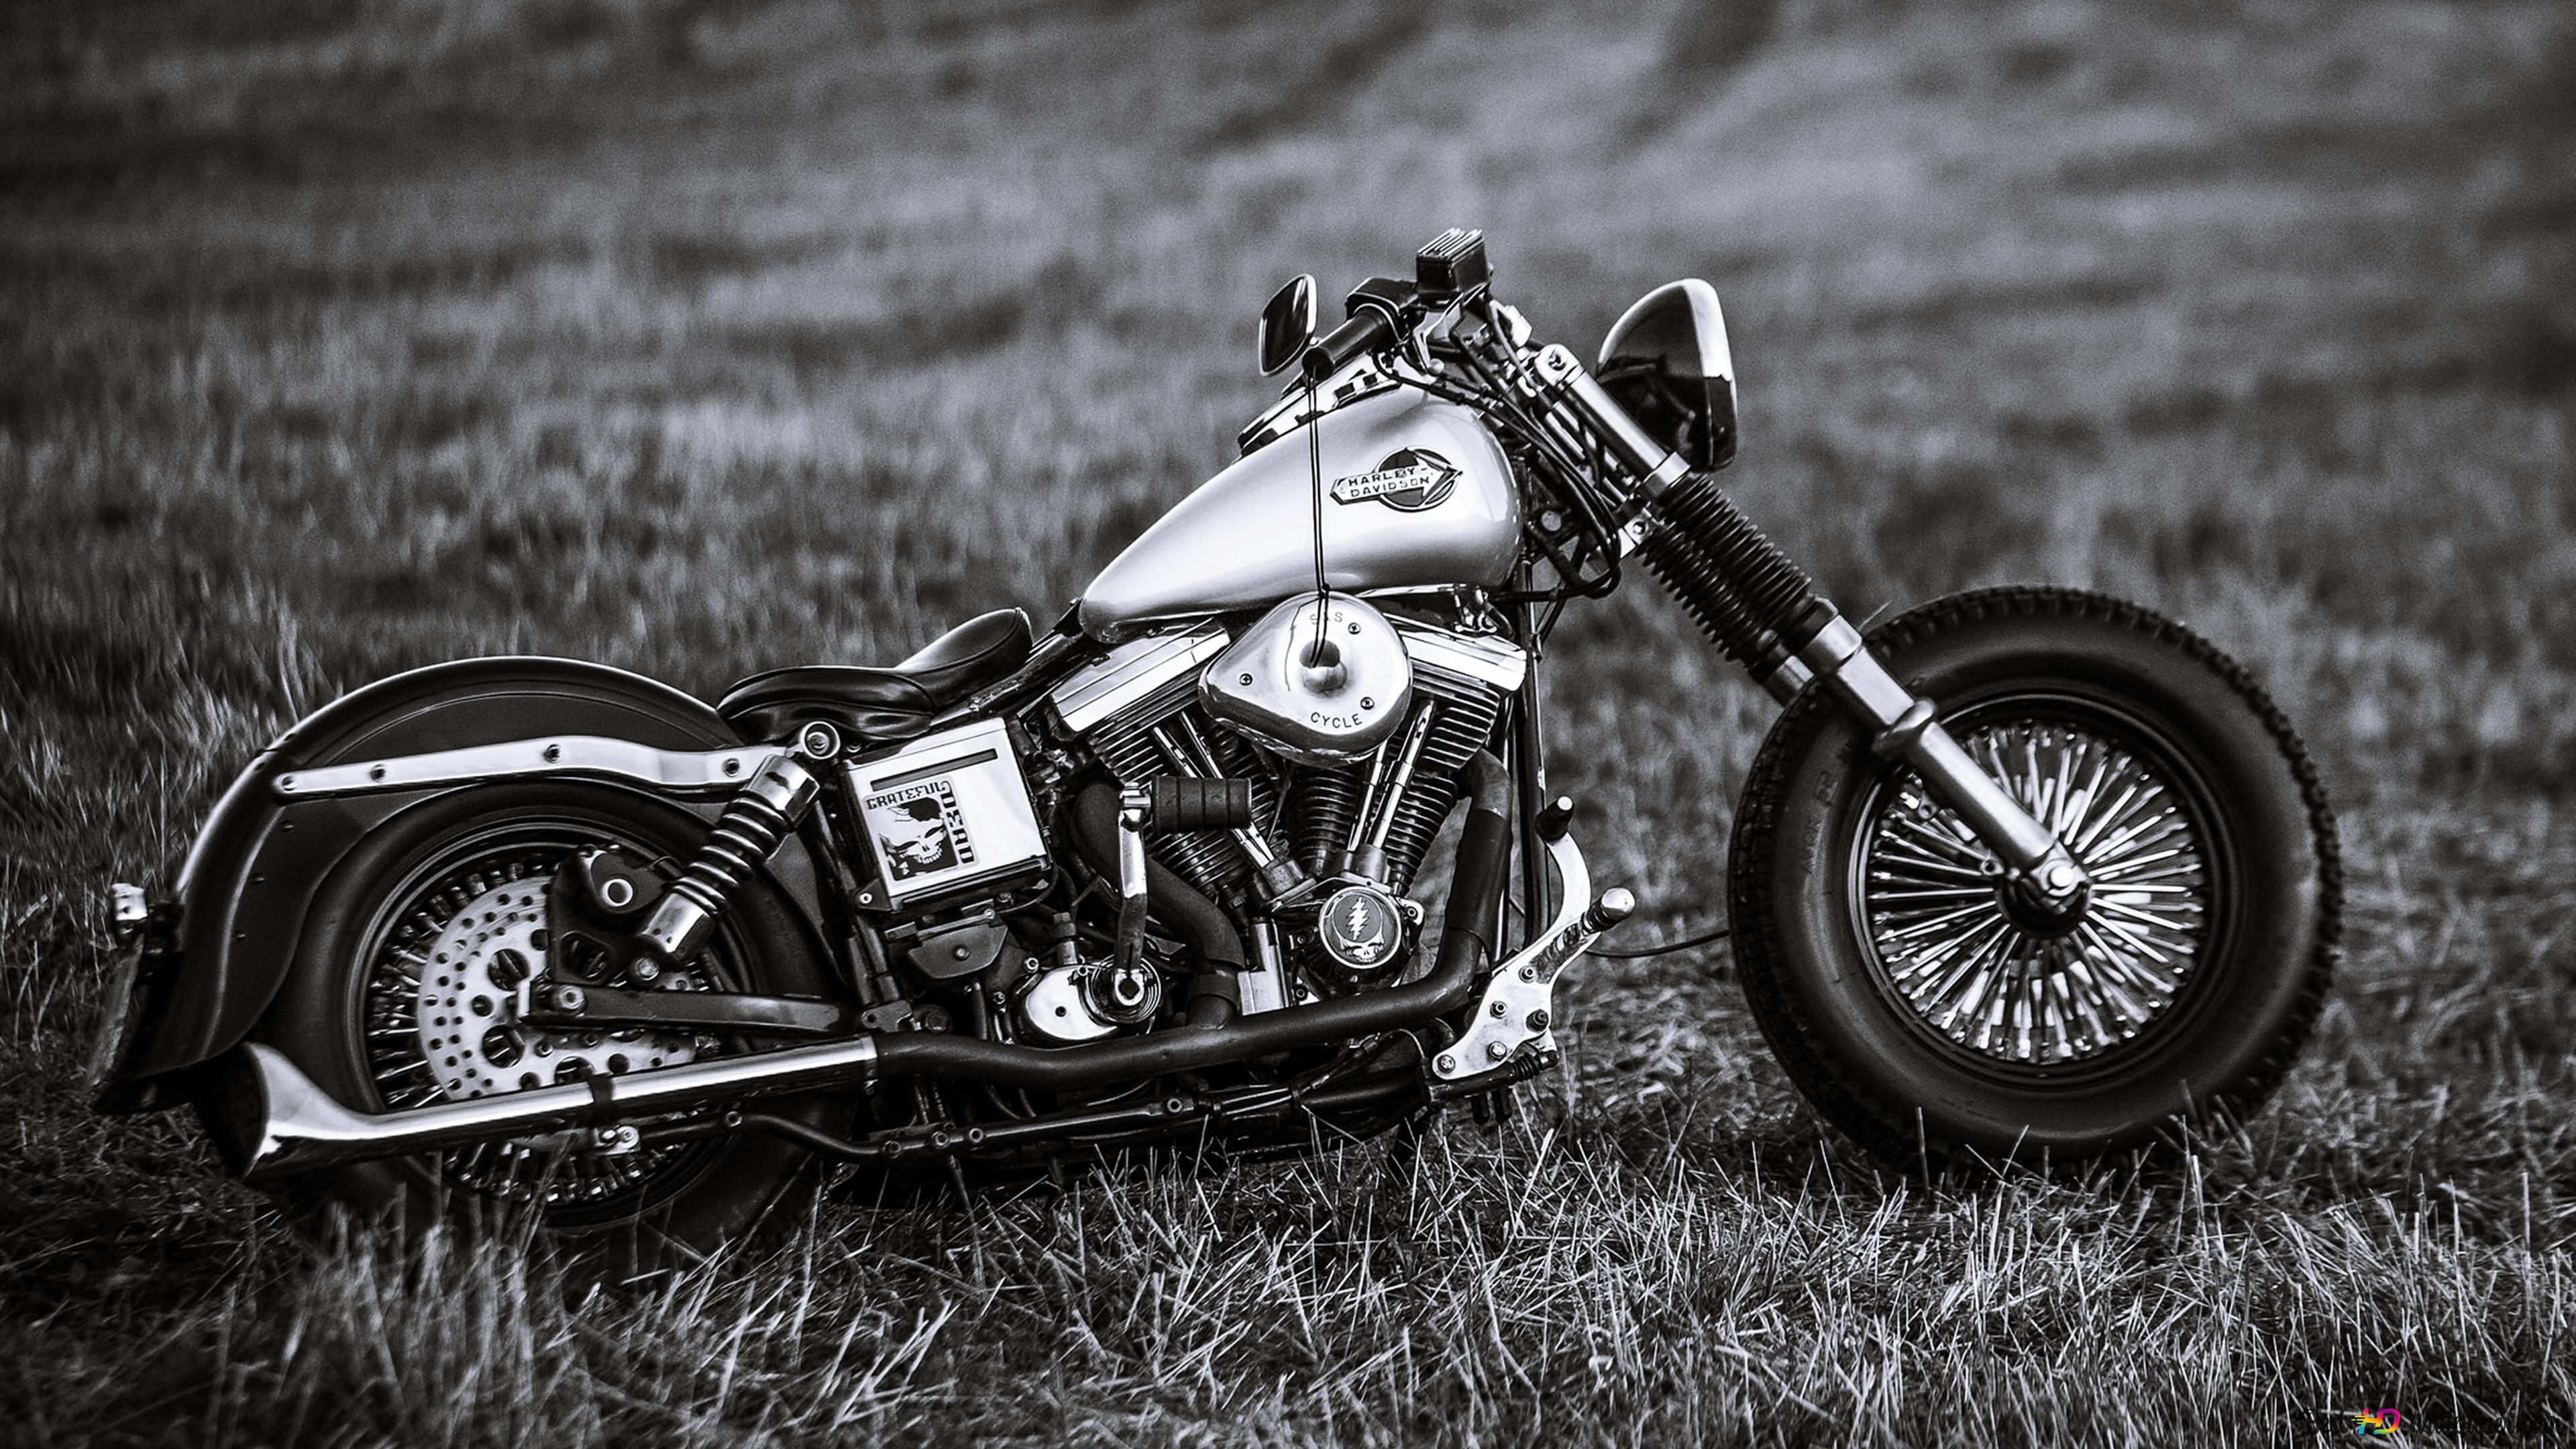 Harley Davidson Black and White Nostalgia 4K wallpaper download